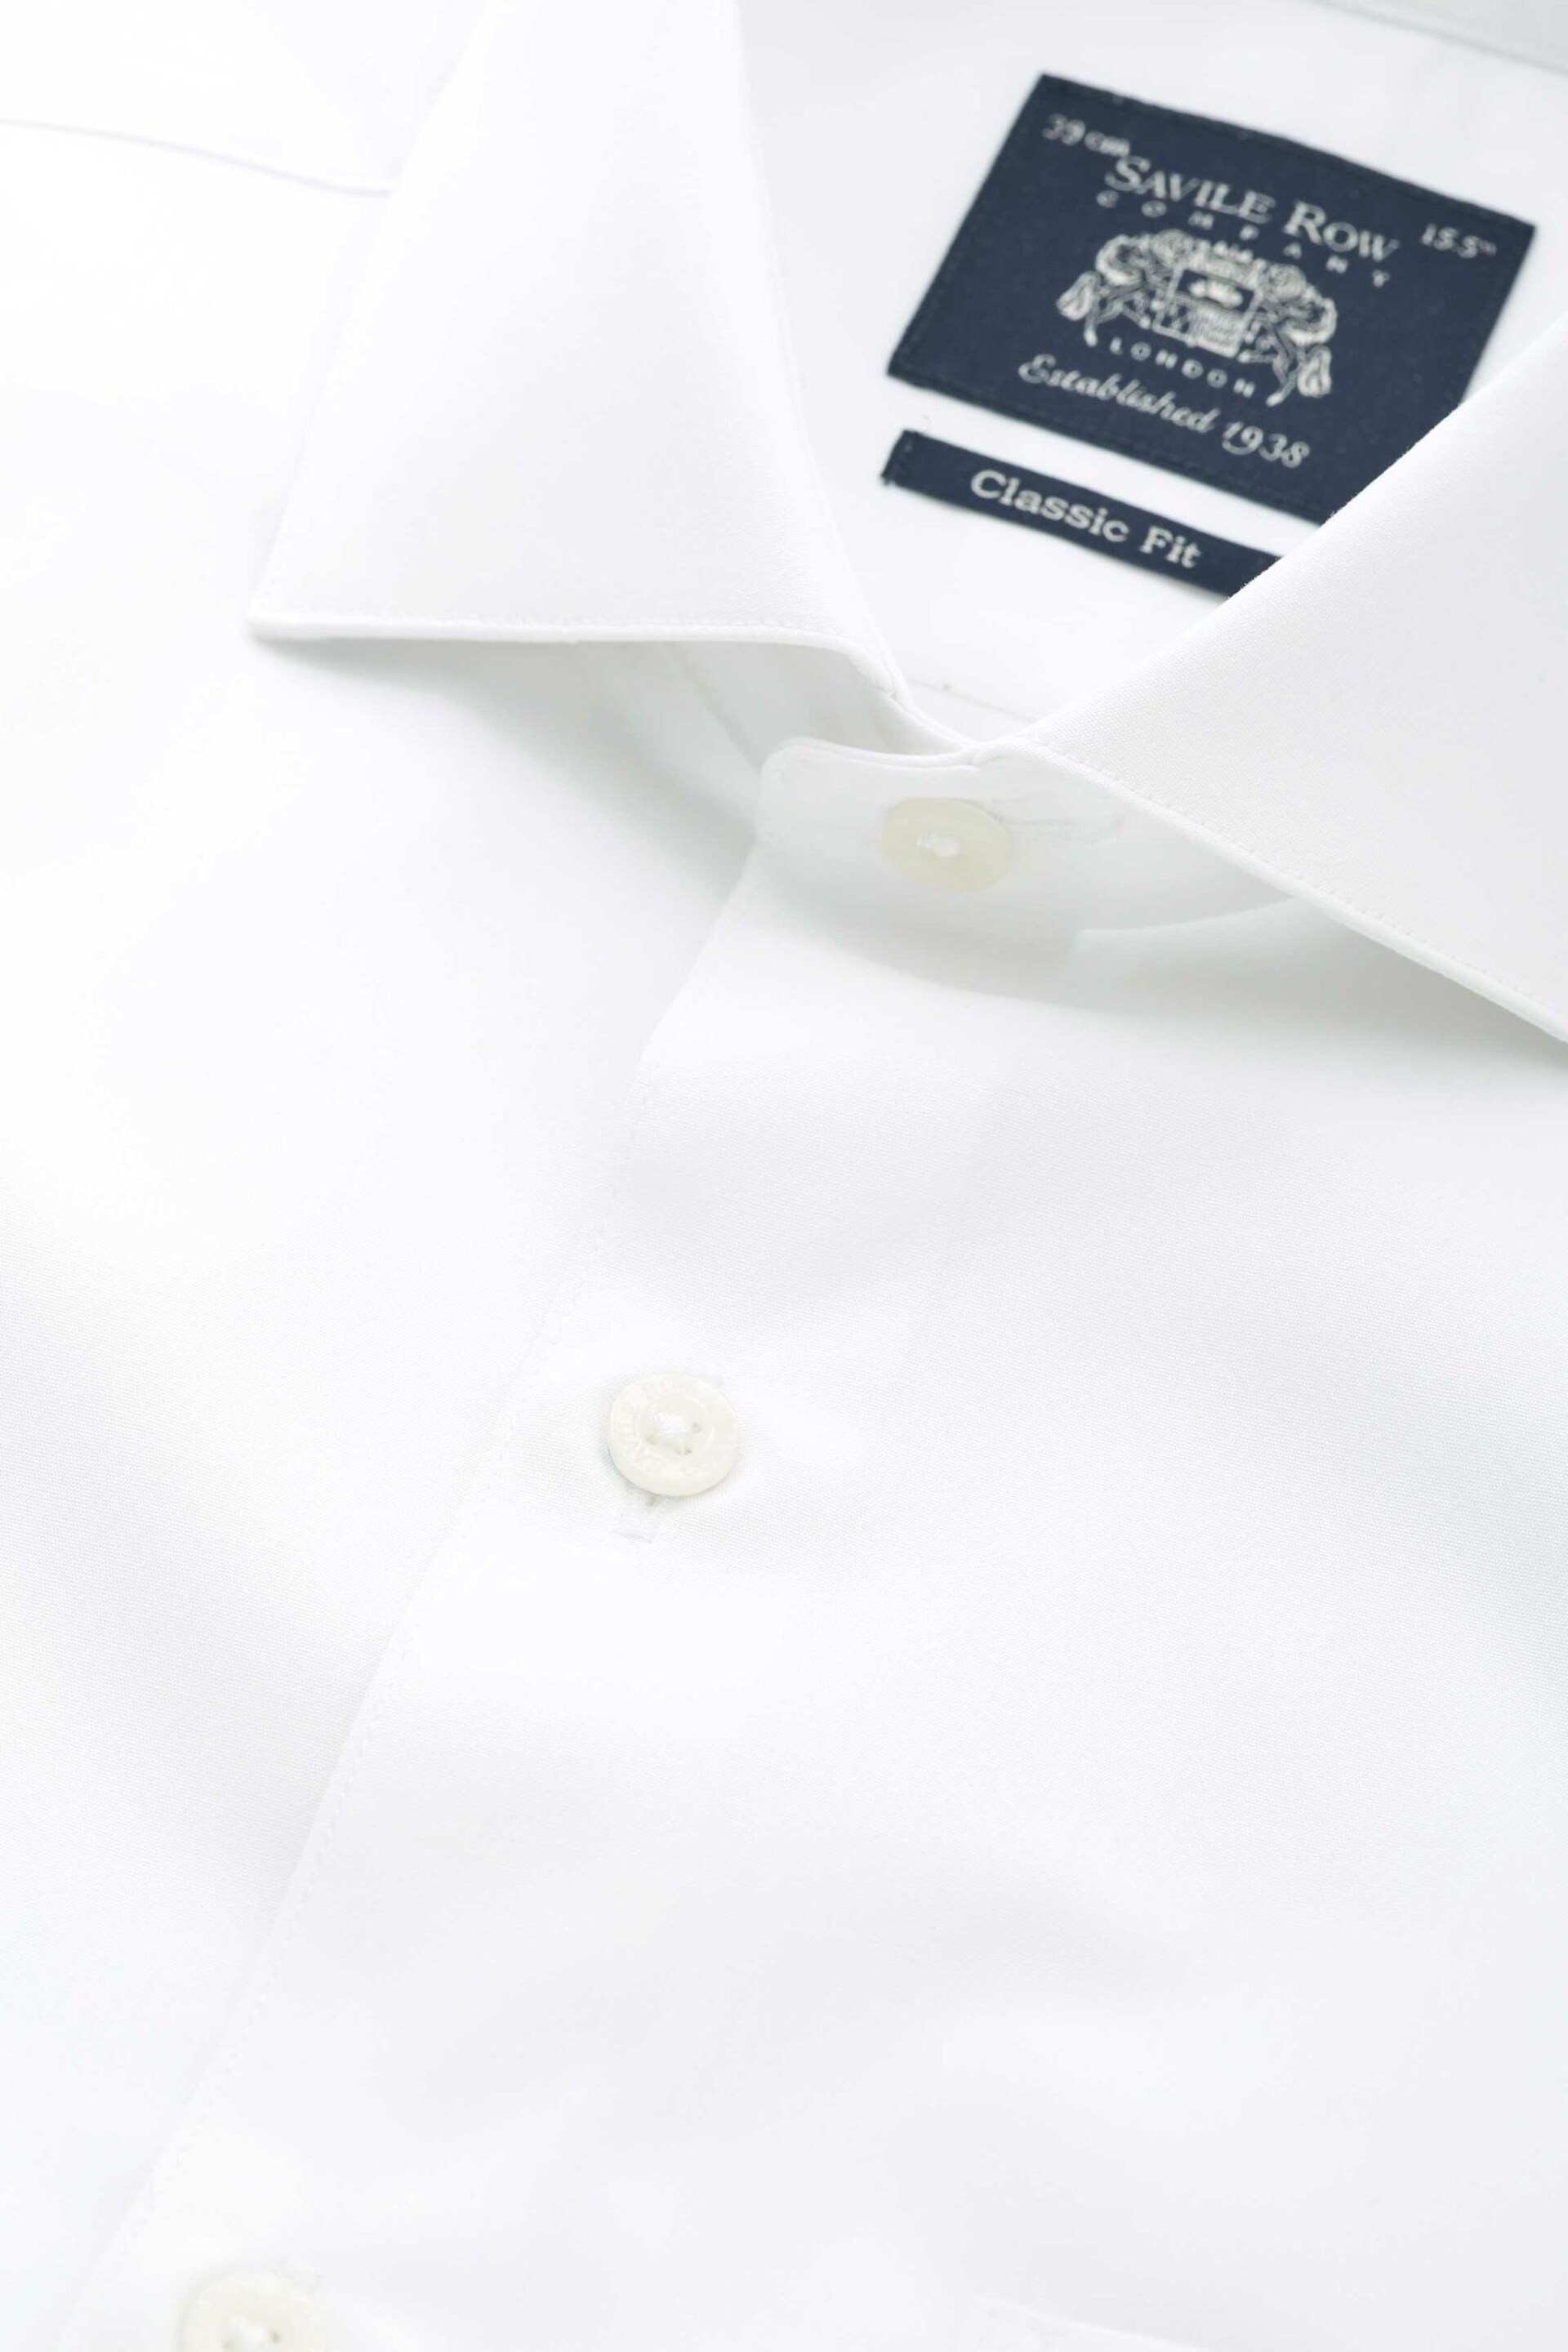 Savile Row Company Classic Fit Single Cuff Formal White Shirt - Image 6 of 7